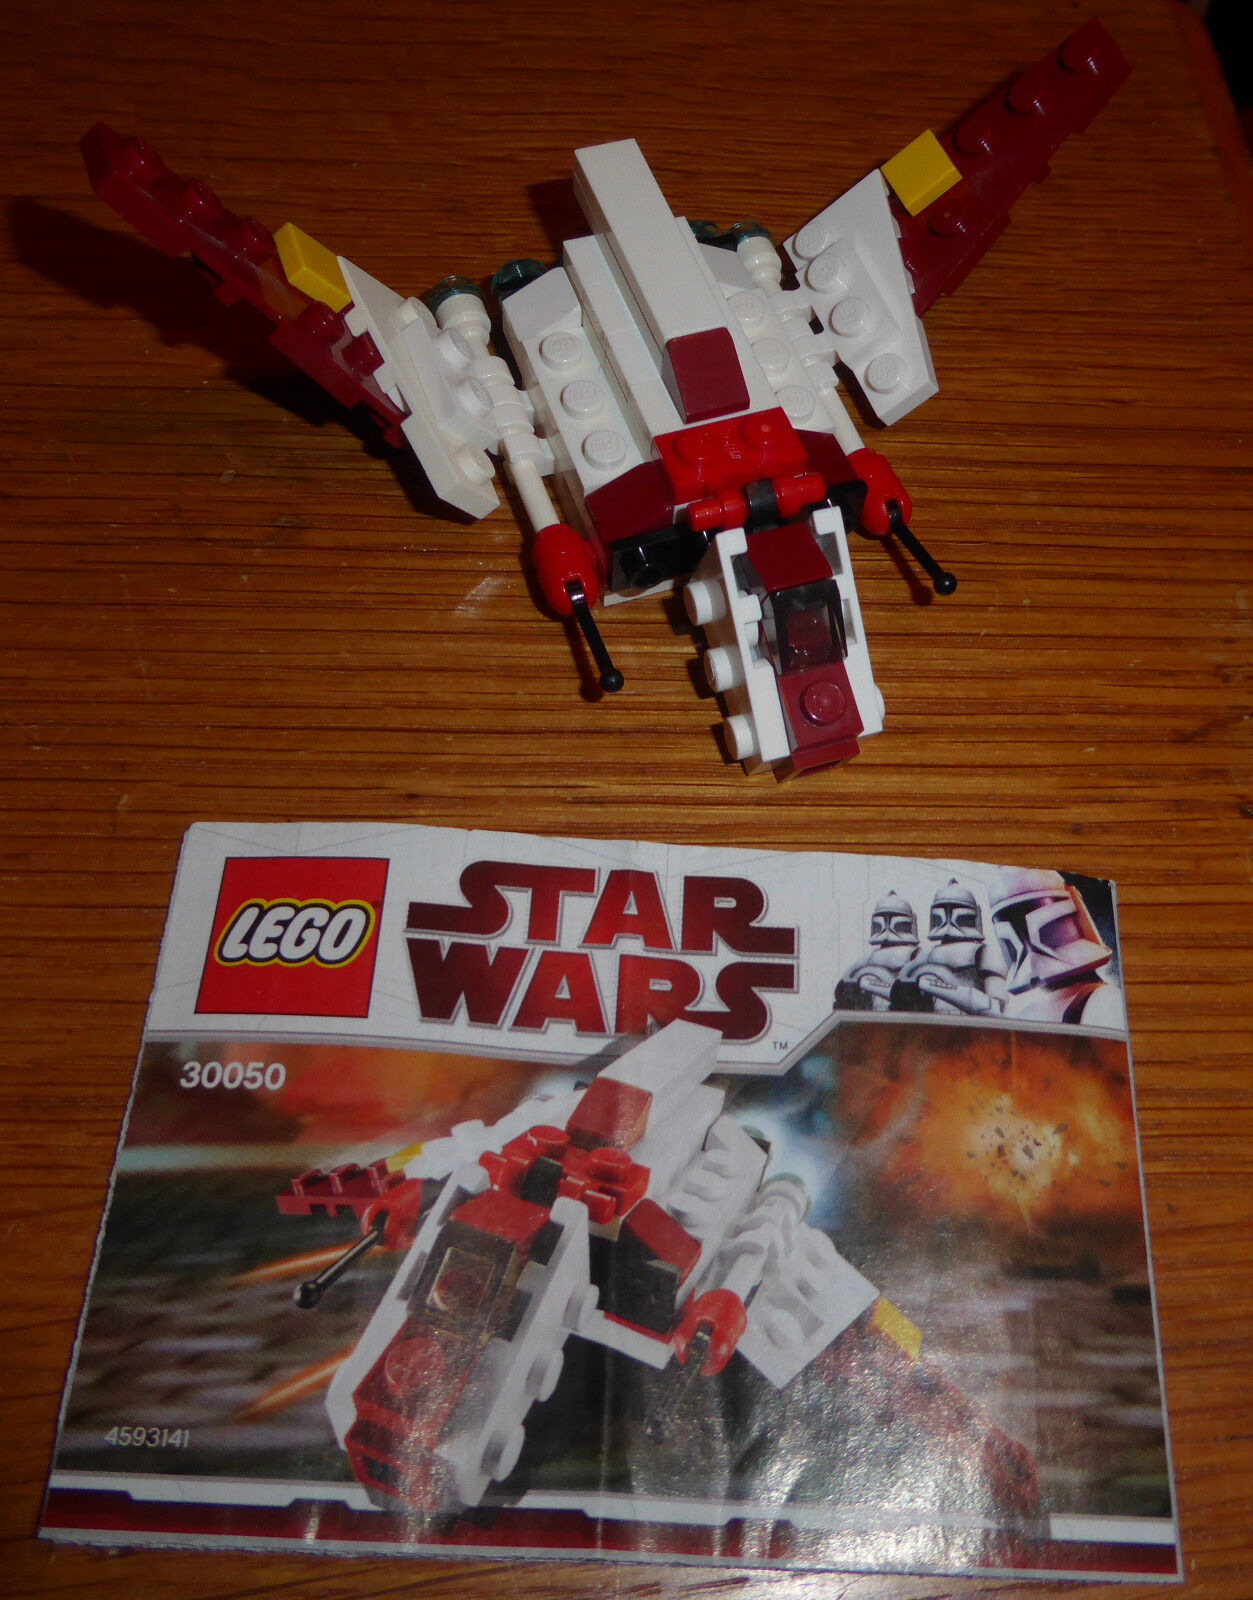 Lego - Star Wars - Republic Attack Shuttle - #30050 - Complete - Retired